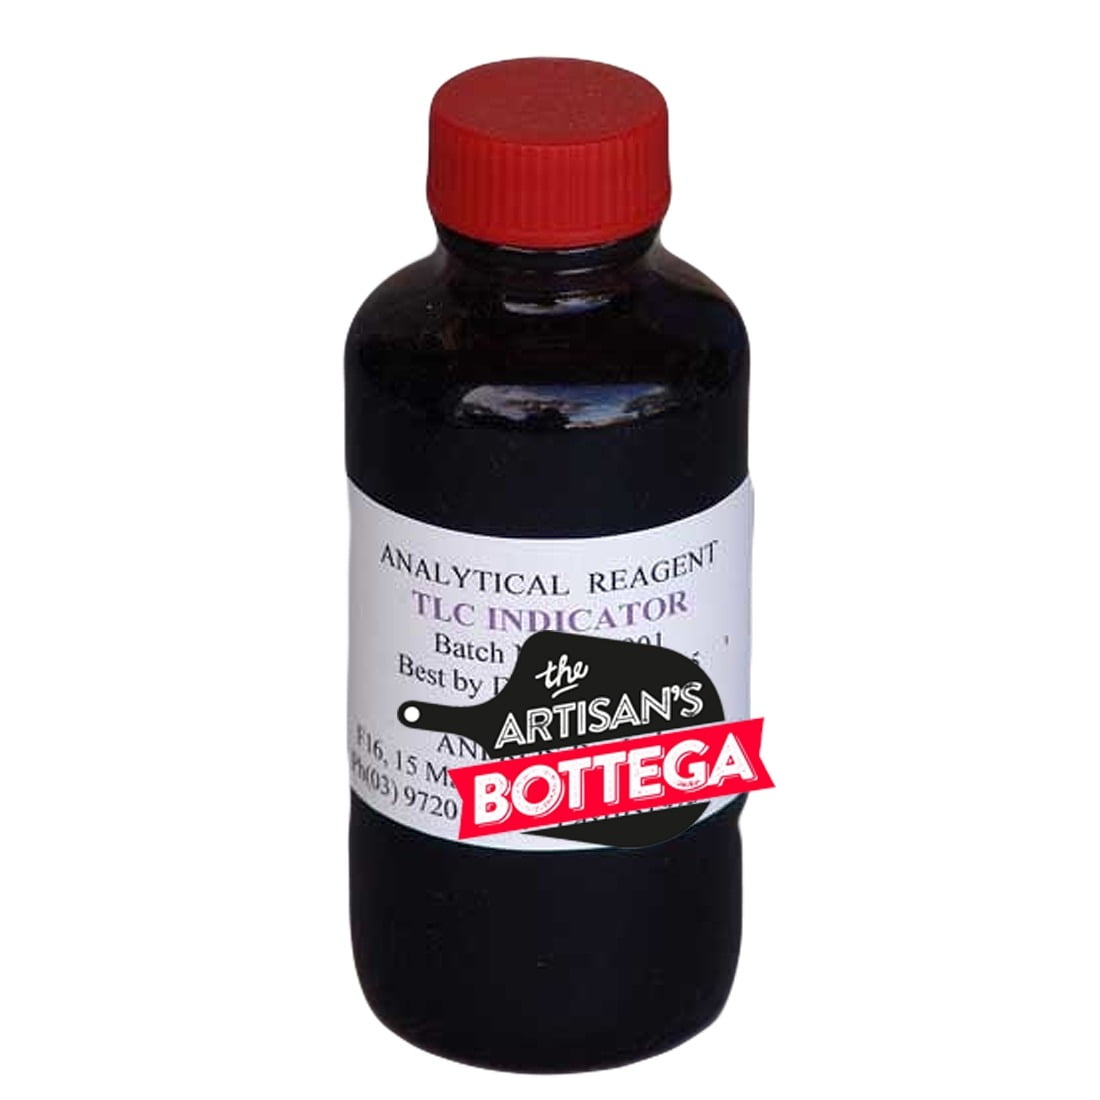 products-125910_laboratory_-_reagents__artisans_bottega.jpg